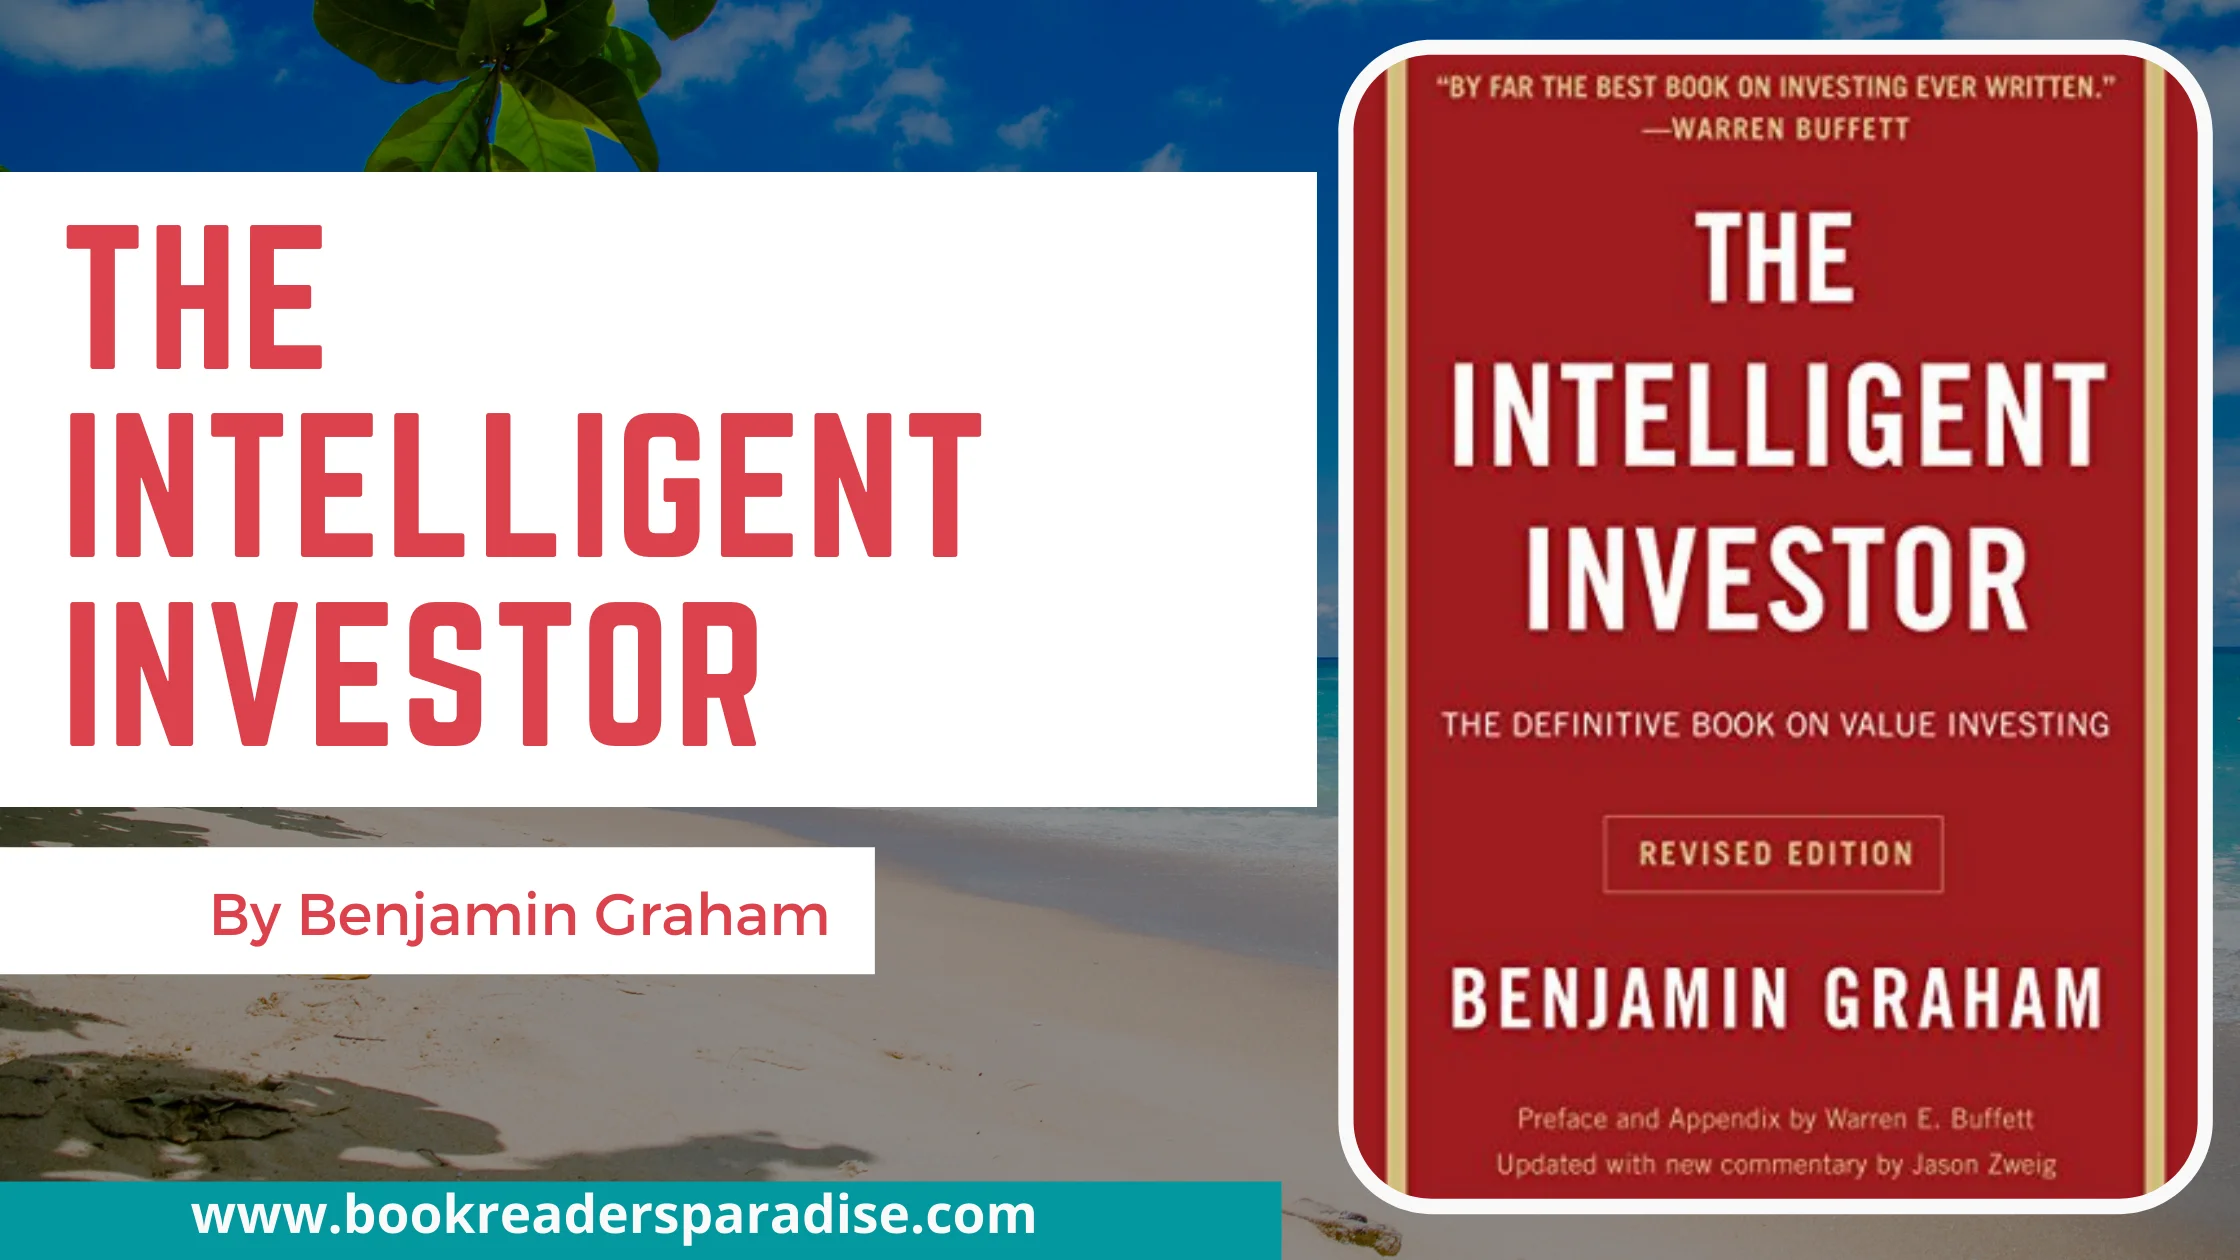 The Intelligent Investor PDF Summary (By Benjamin Graham) & Audiobook Free Download Details